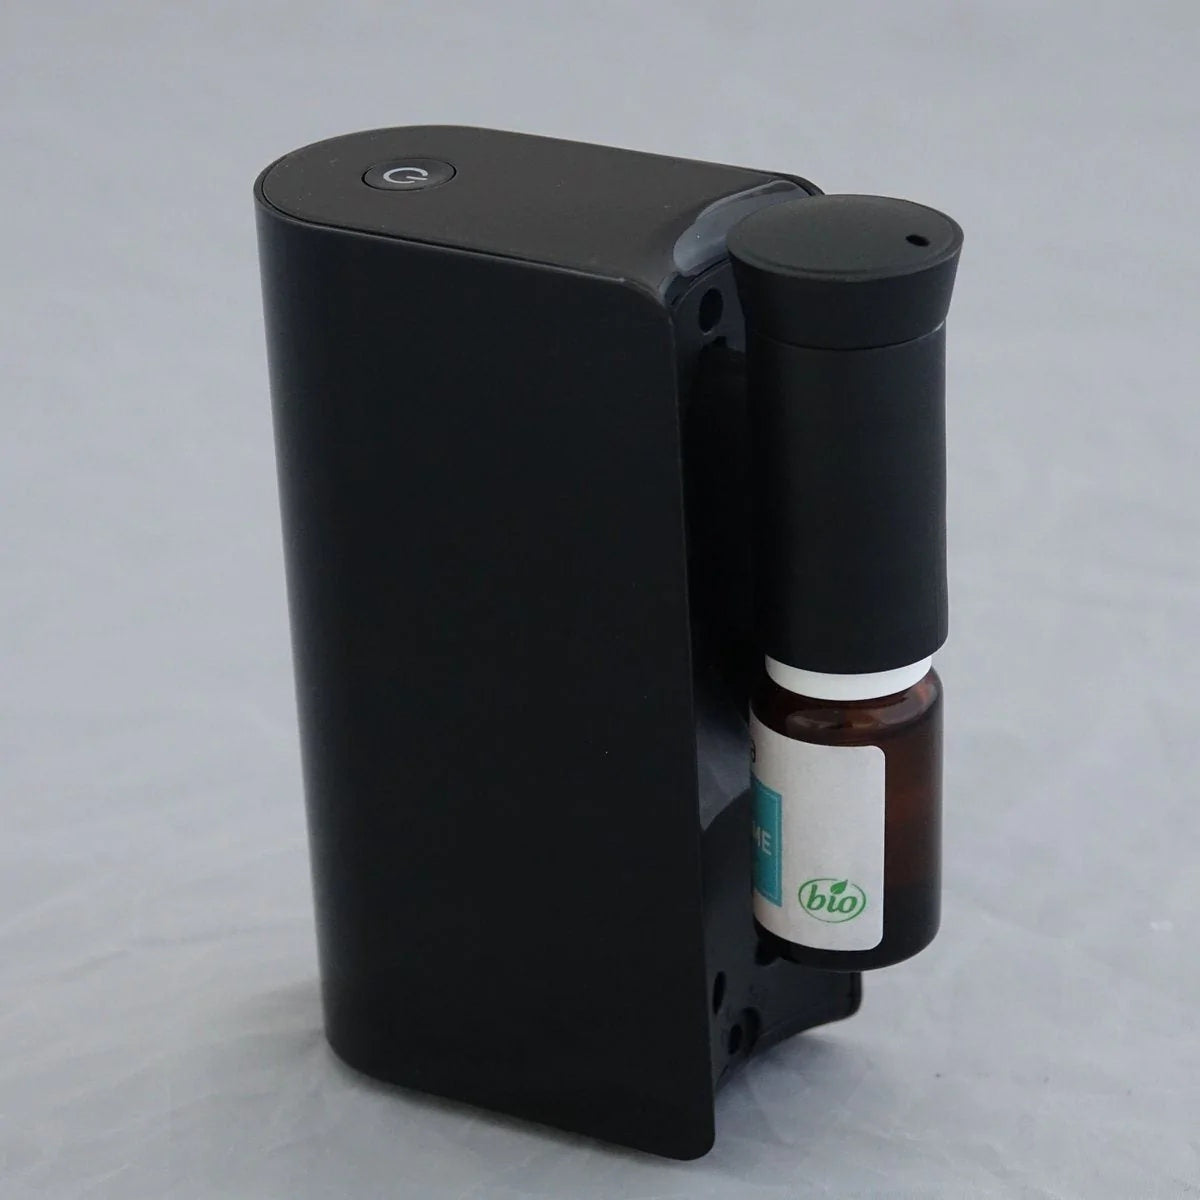 Difuzor Nebulizator Aromaterapie Mobysens - Pana la 80m² Wireless Reincarcabil 2 Moduri Autonomie 20 ore - Black - MOBYSENS-NOIR